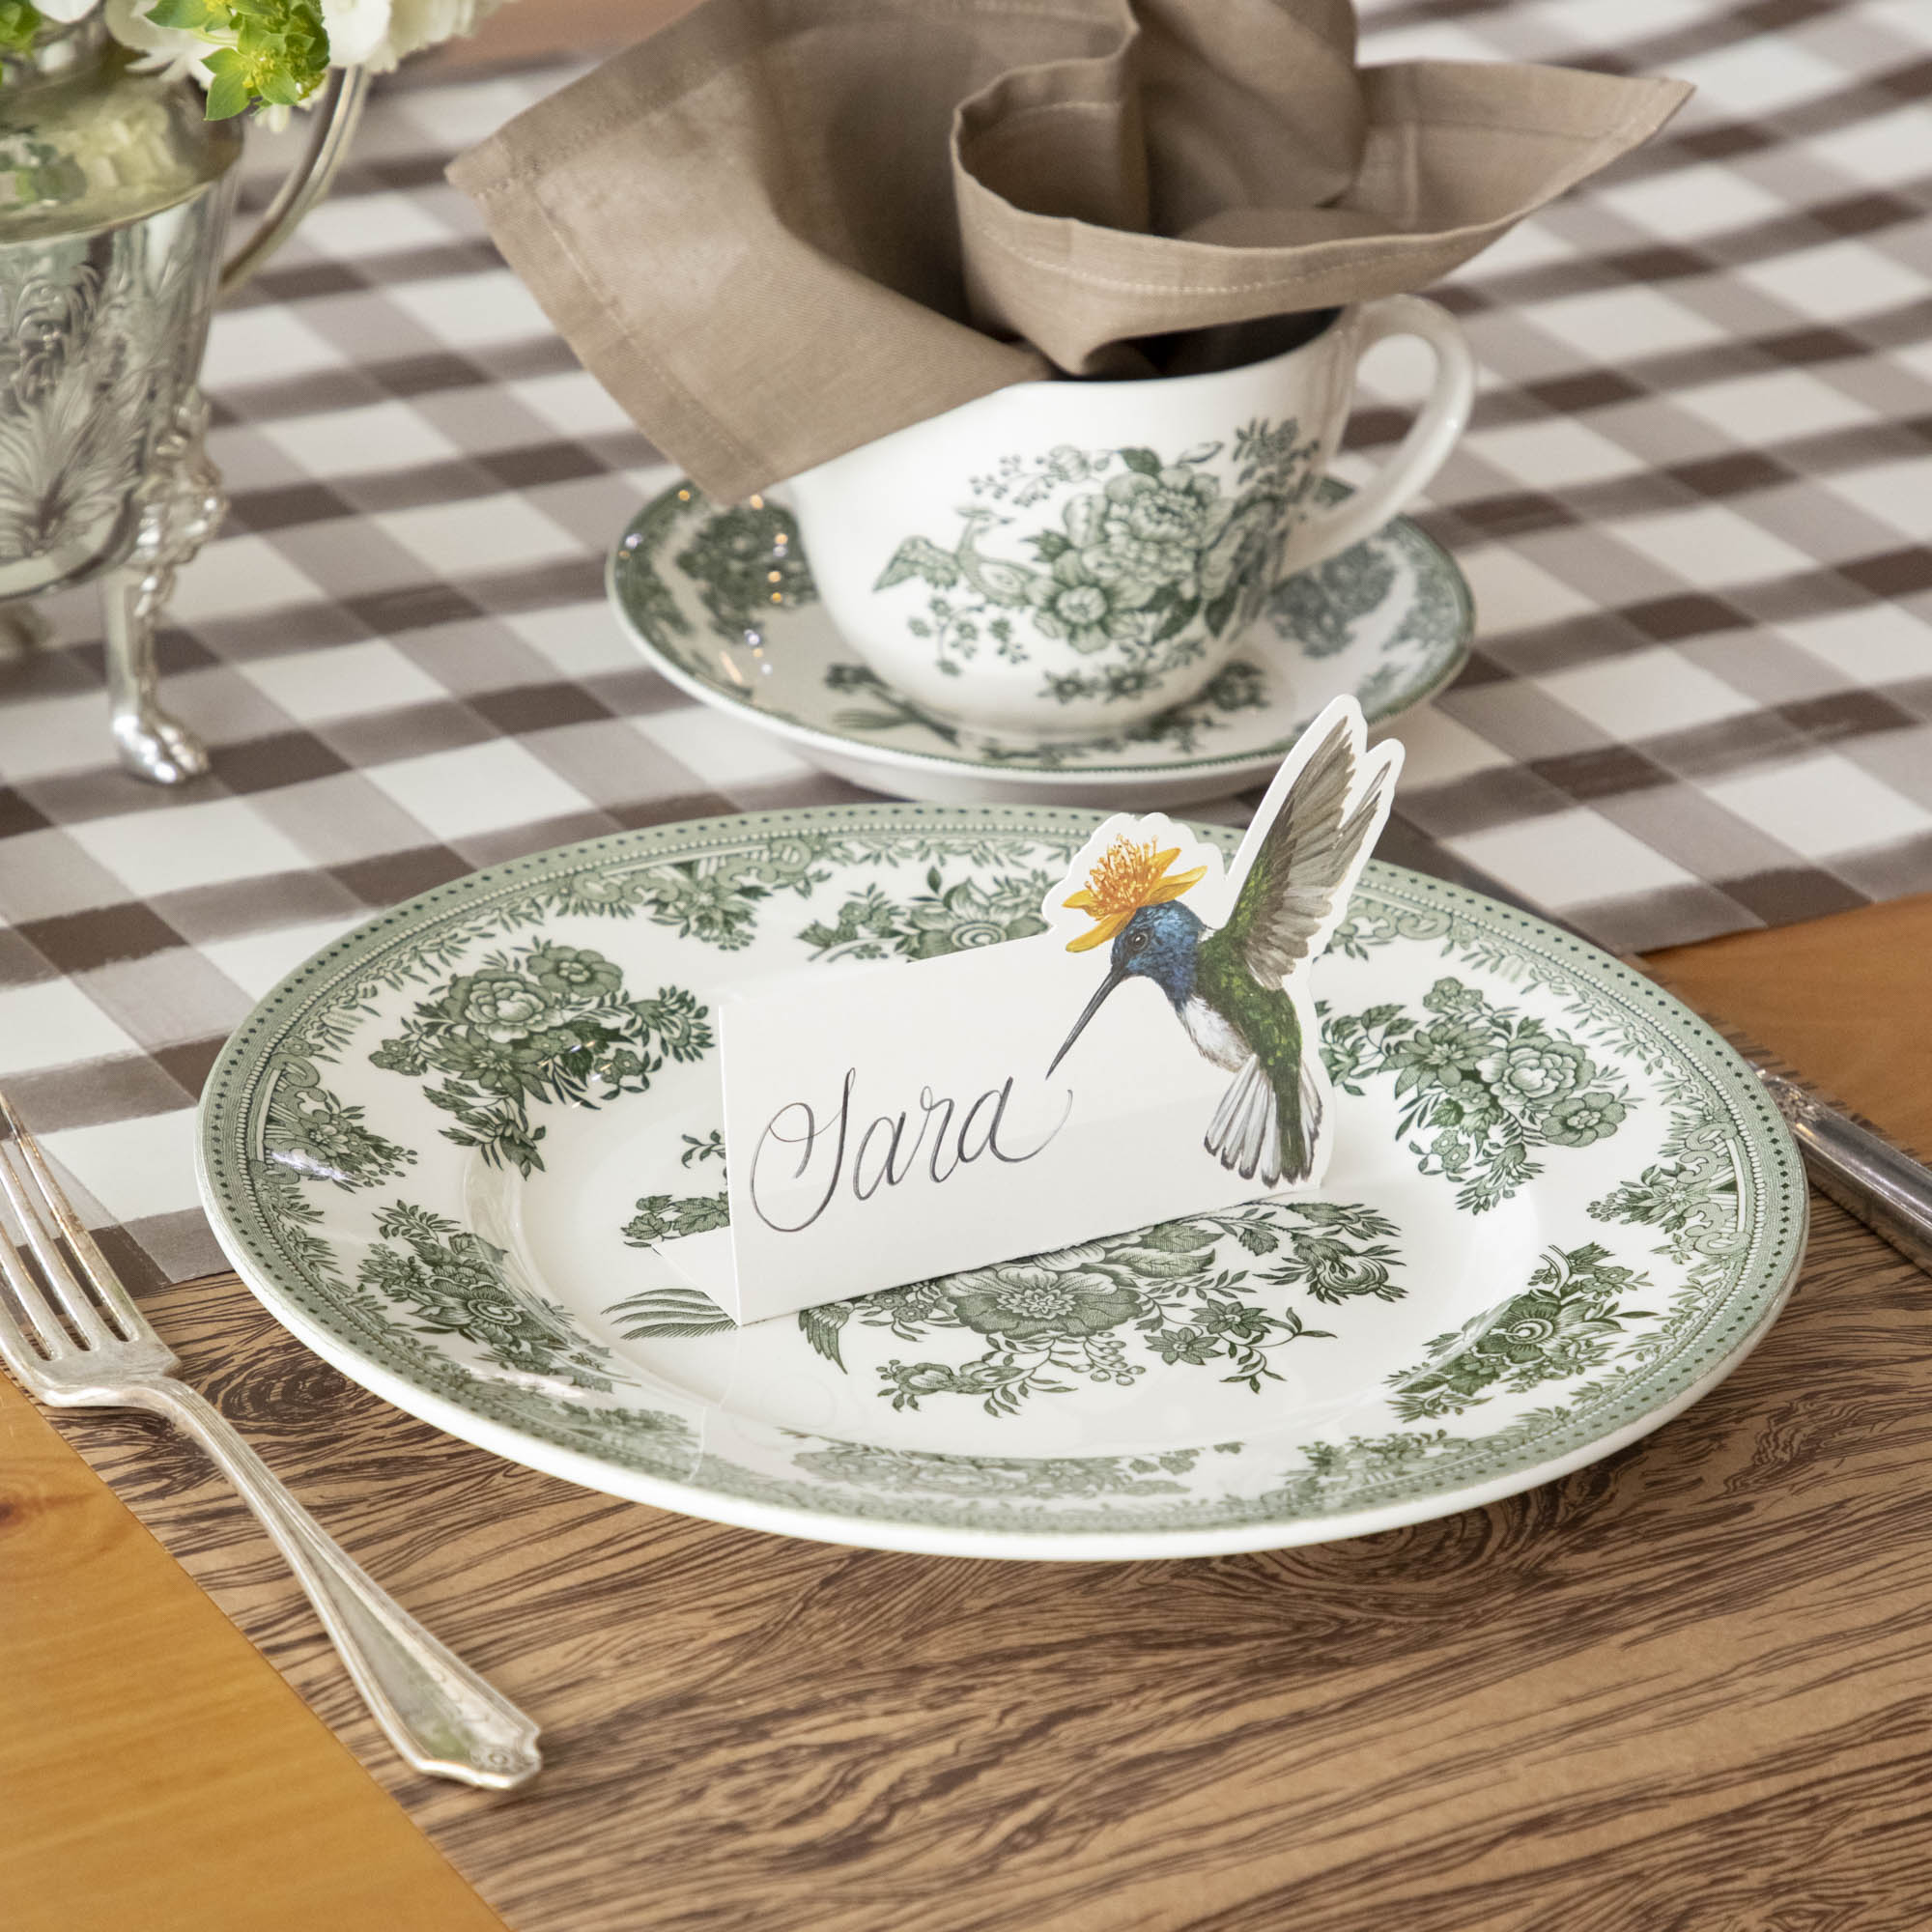 An elegant table setting featuring Burleigh&